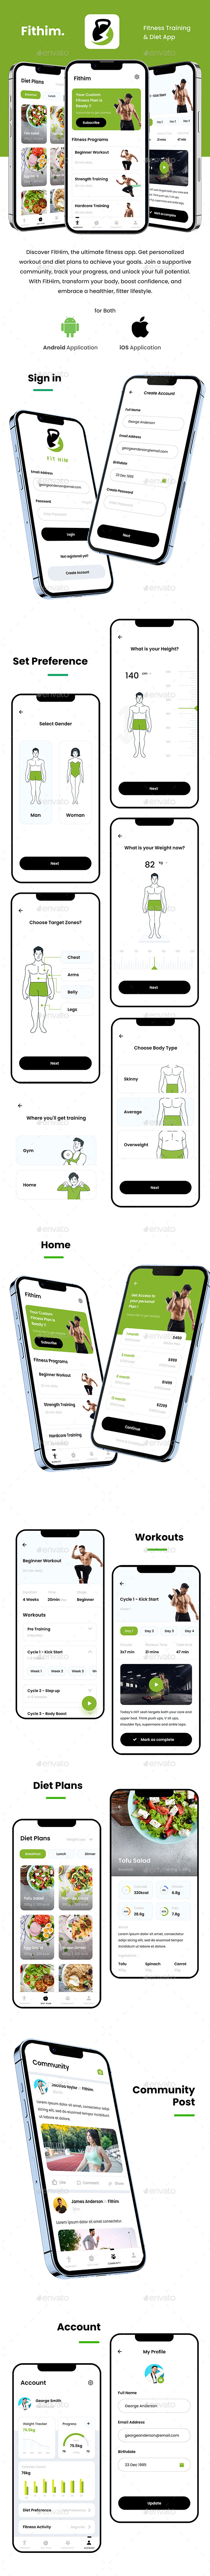 Fitness UI | Workout & Diet Plan Maker App UI Kit | Health & Fitness App UI | FitHim